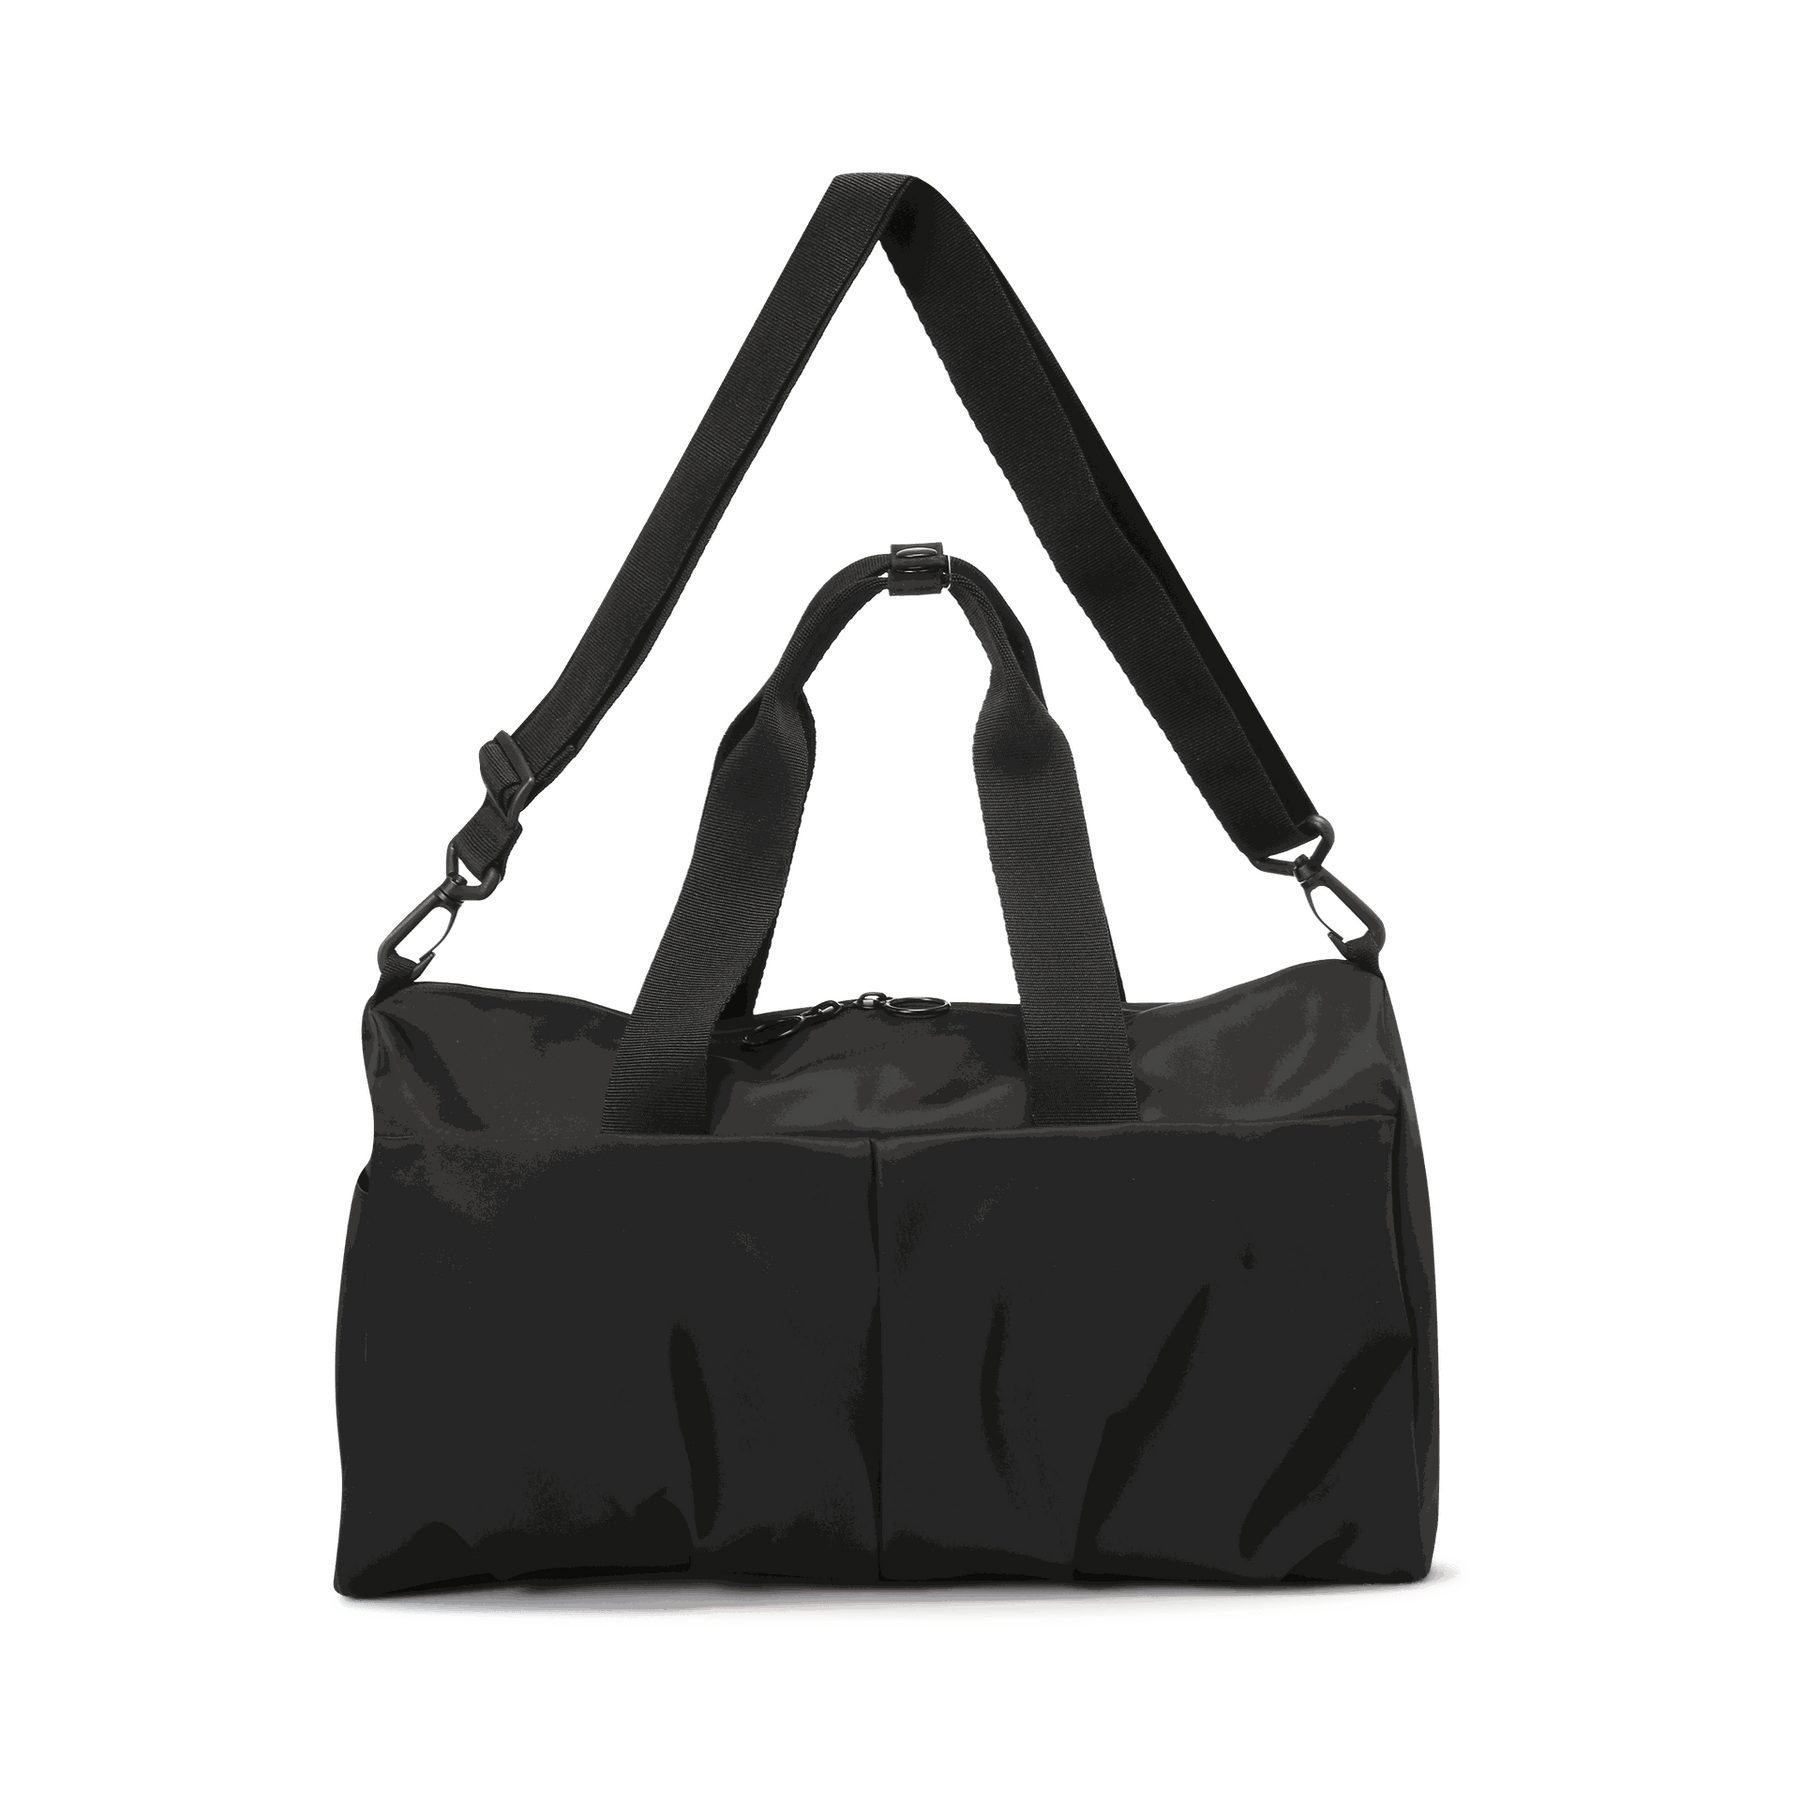 Prospecs shourlder bag | 브랜드 중고거래 플랫폼, 번개장터